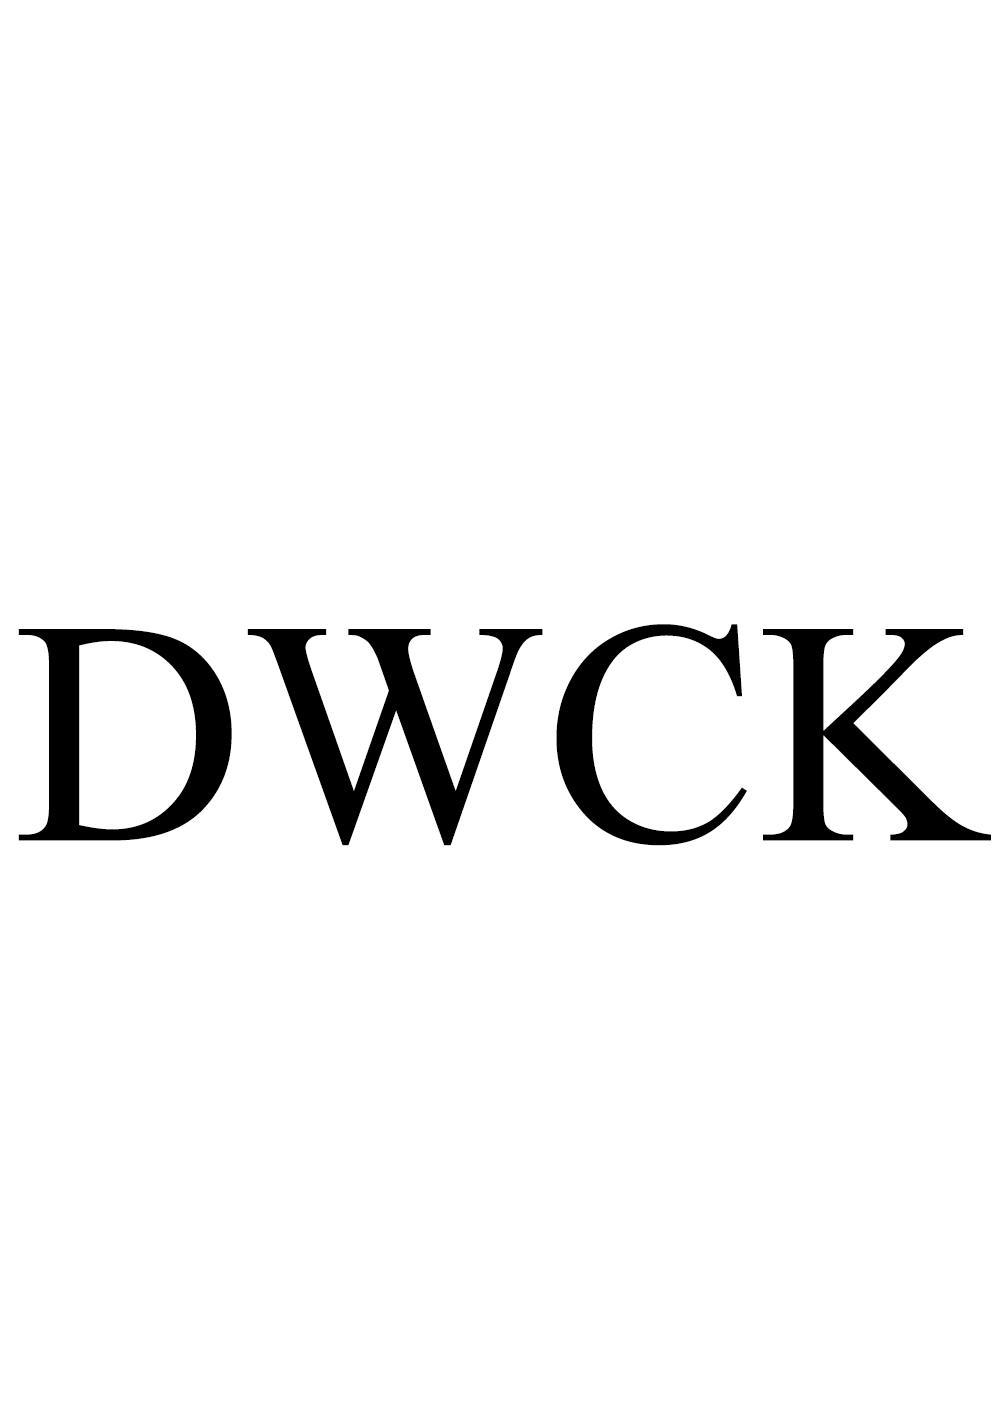 dwck 商标公告